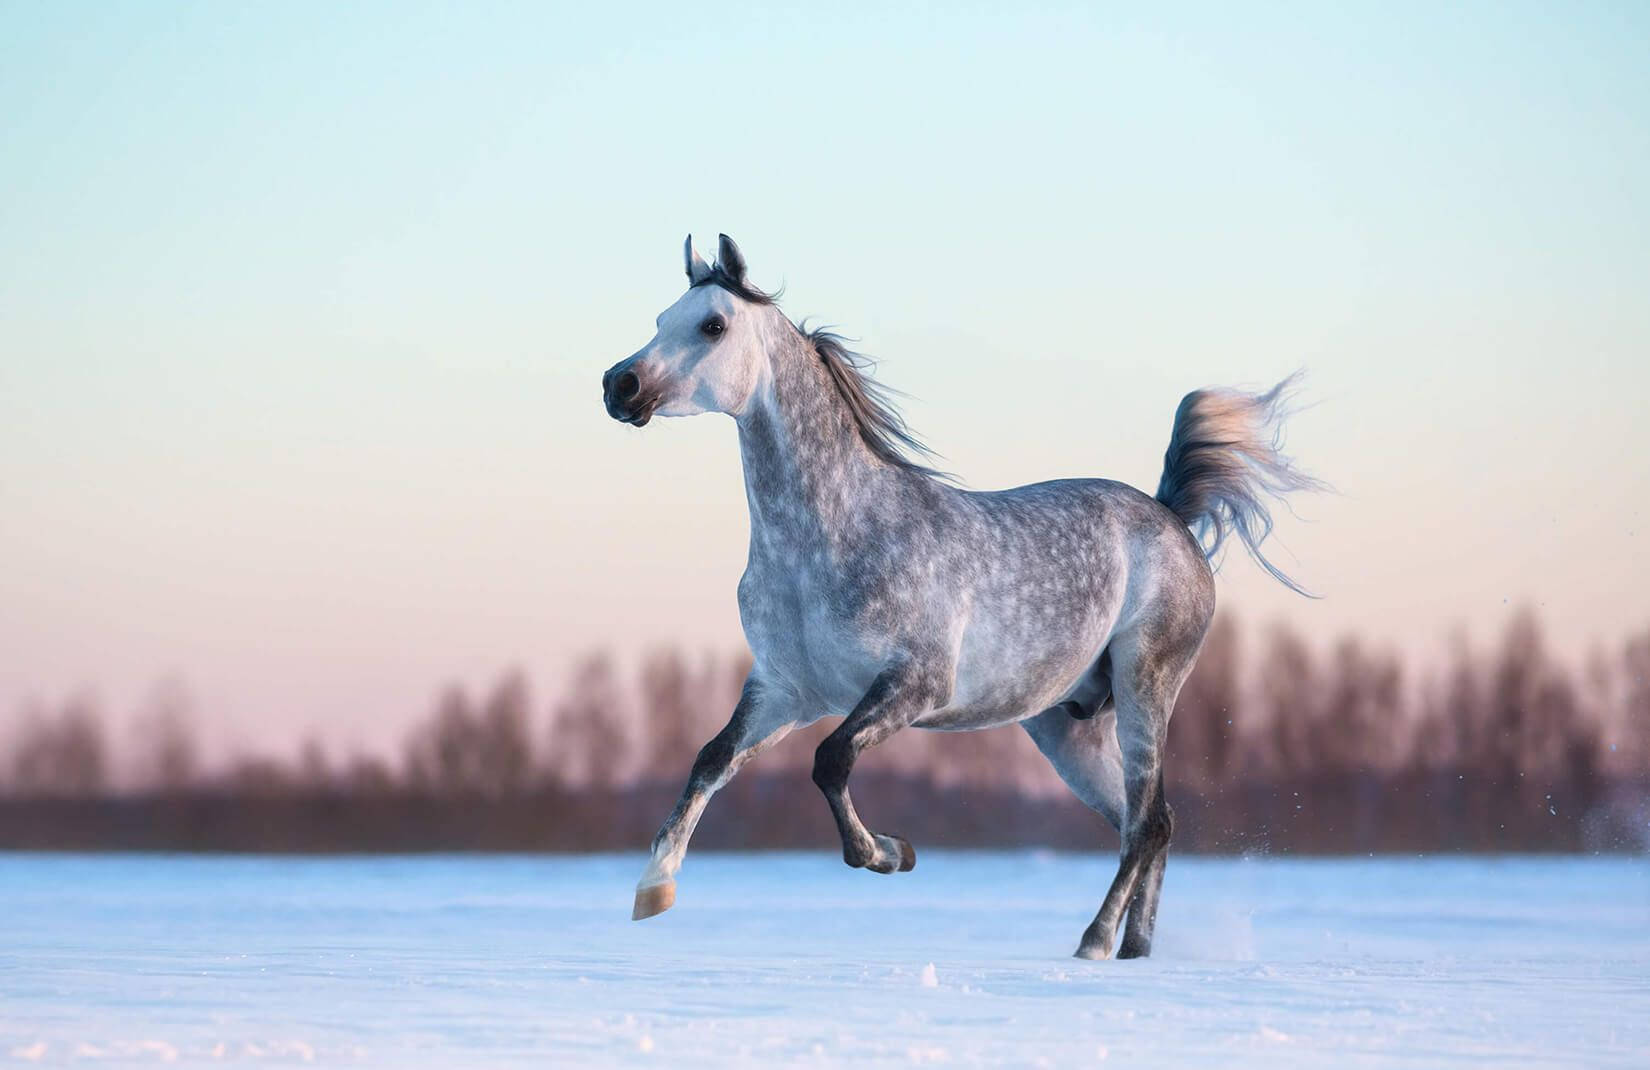 Appaloosa Horse Enjoying a Winter Day Wallpaper